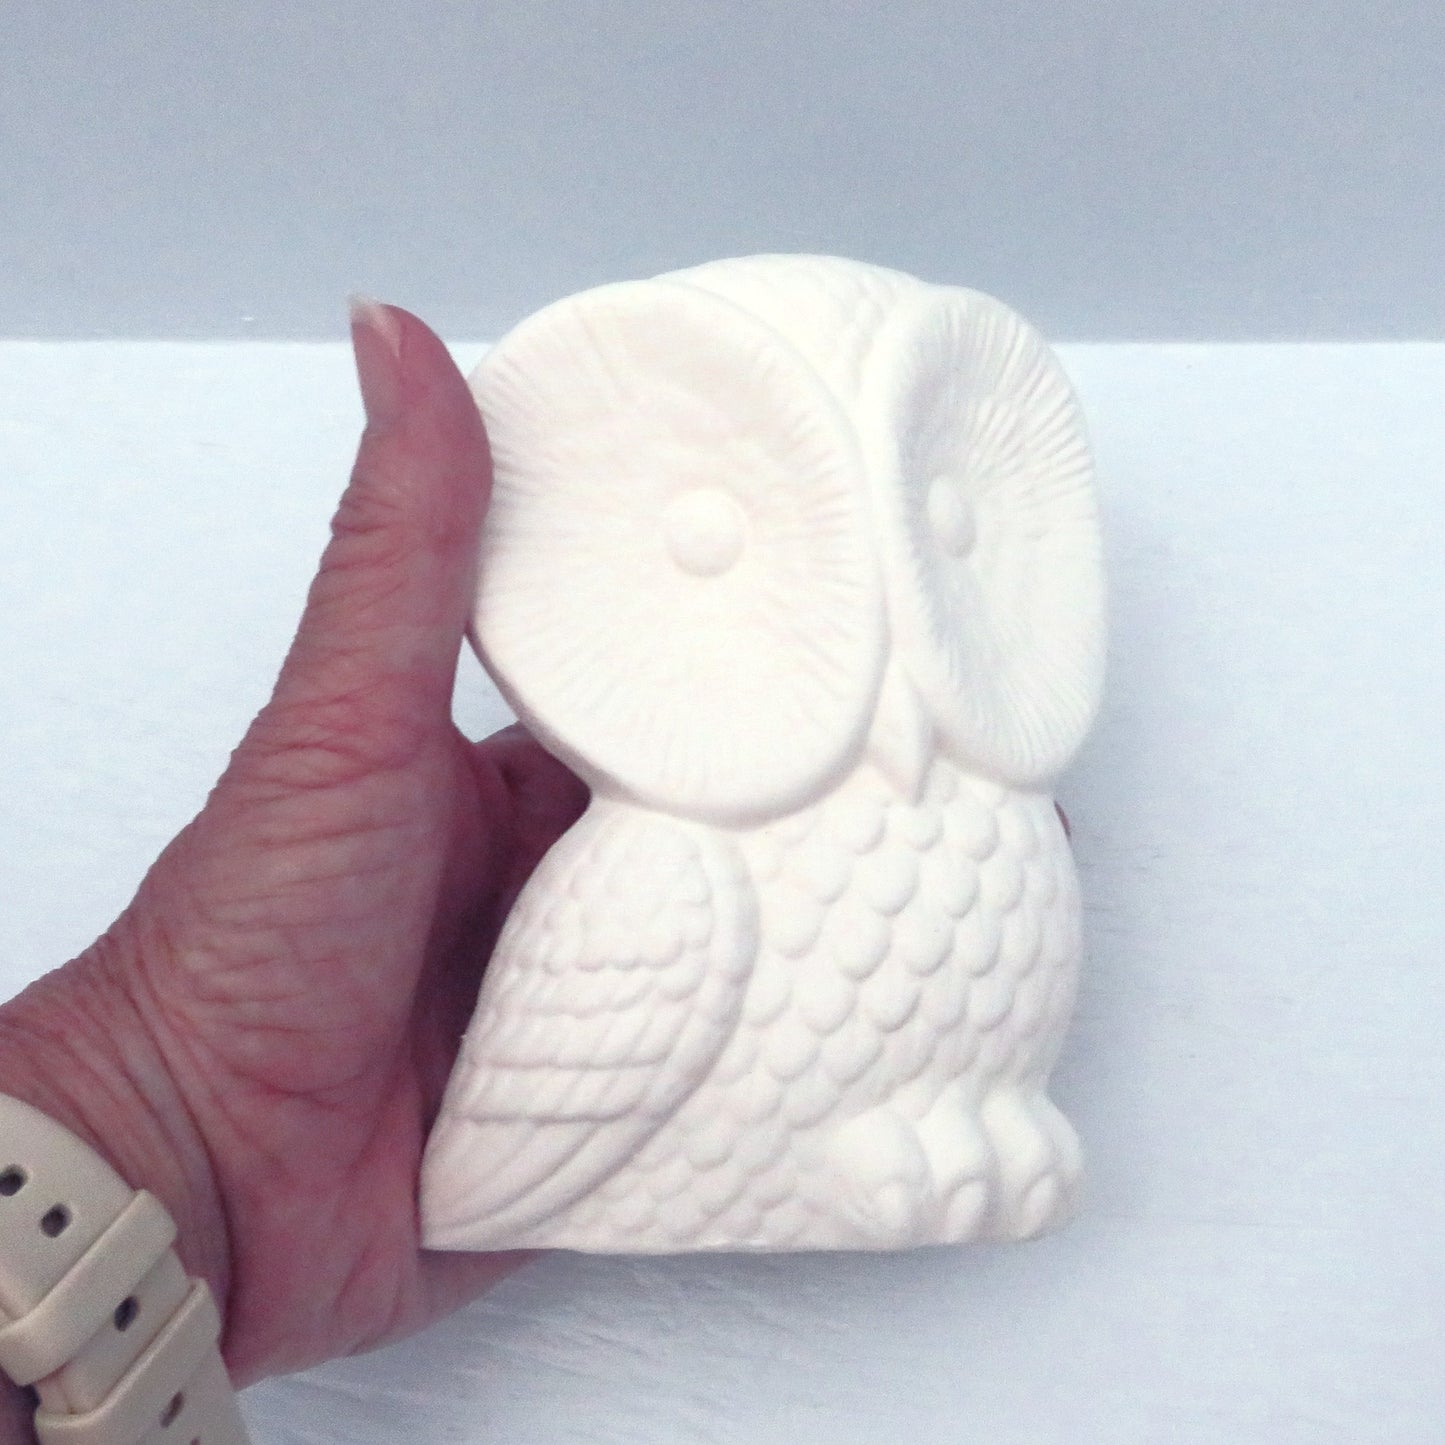 Handmade Ready to Paint Ceramic Owl Figurine